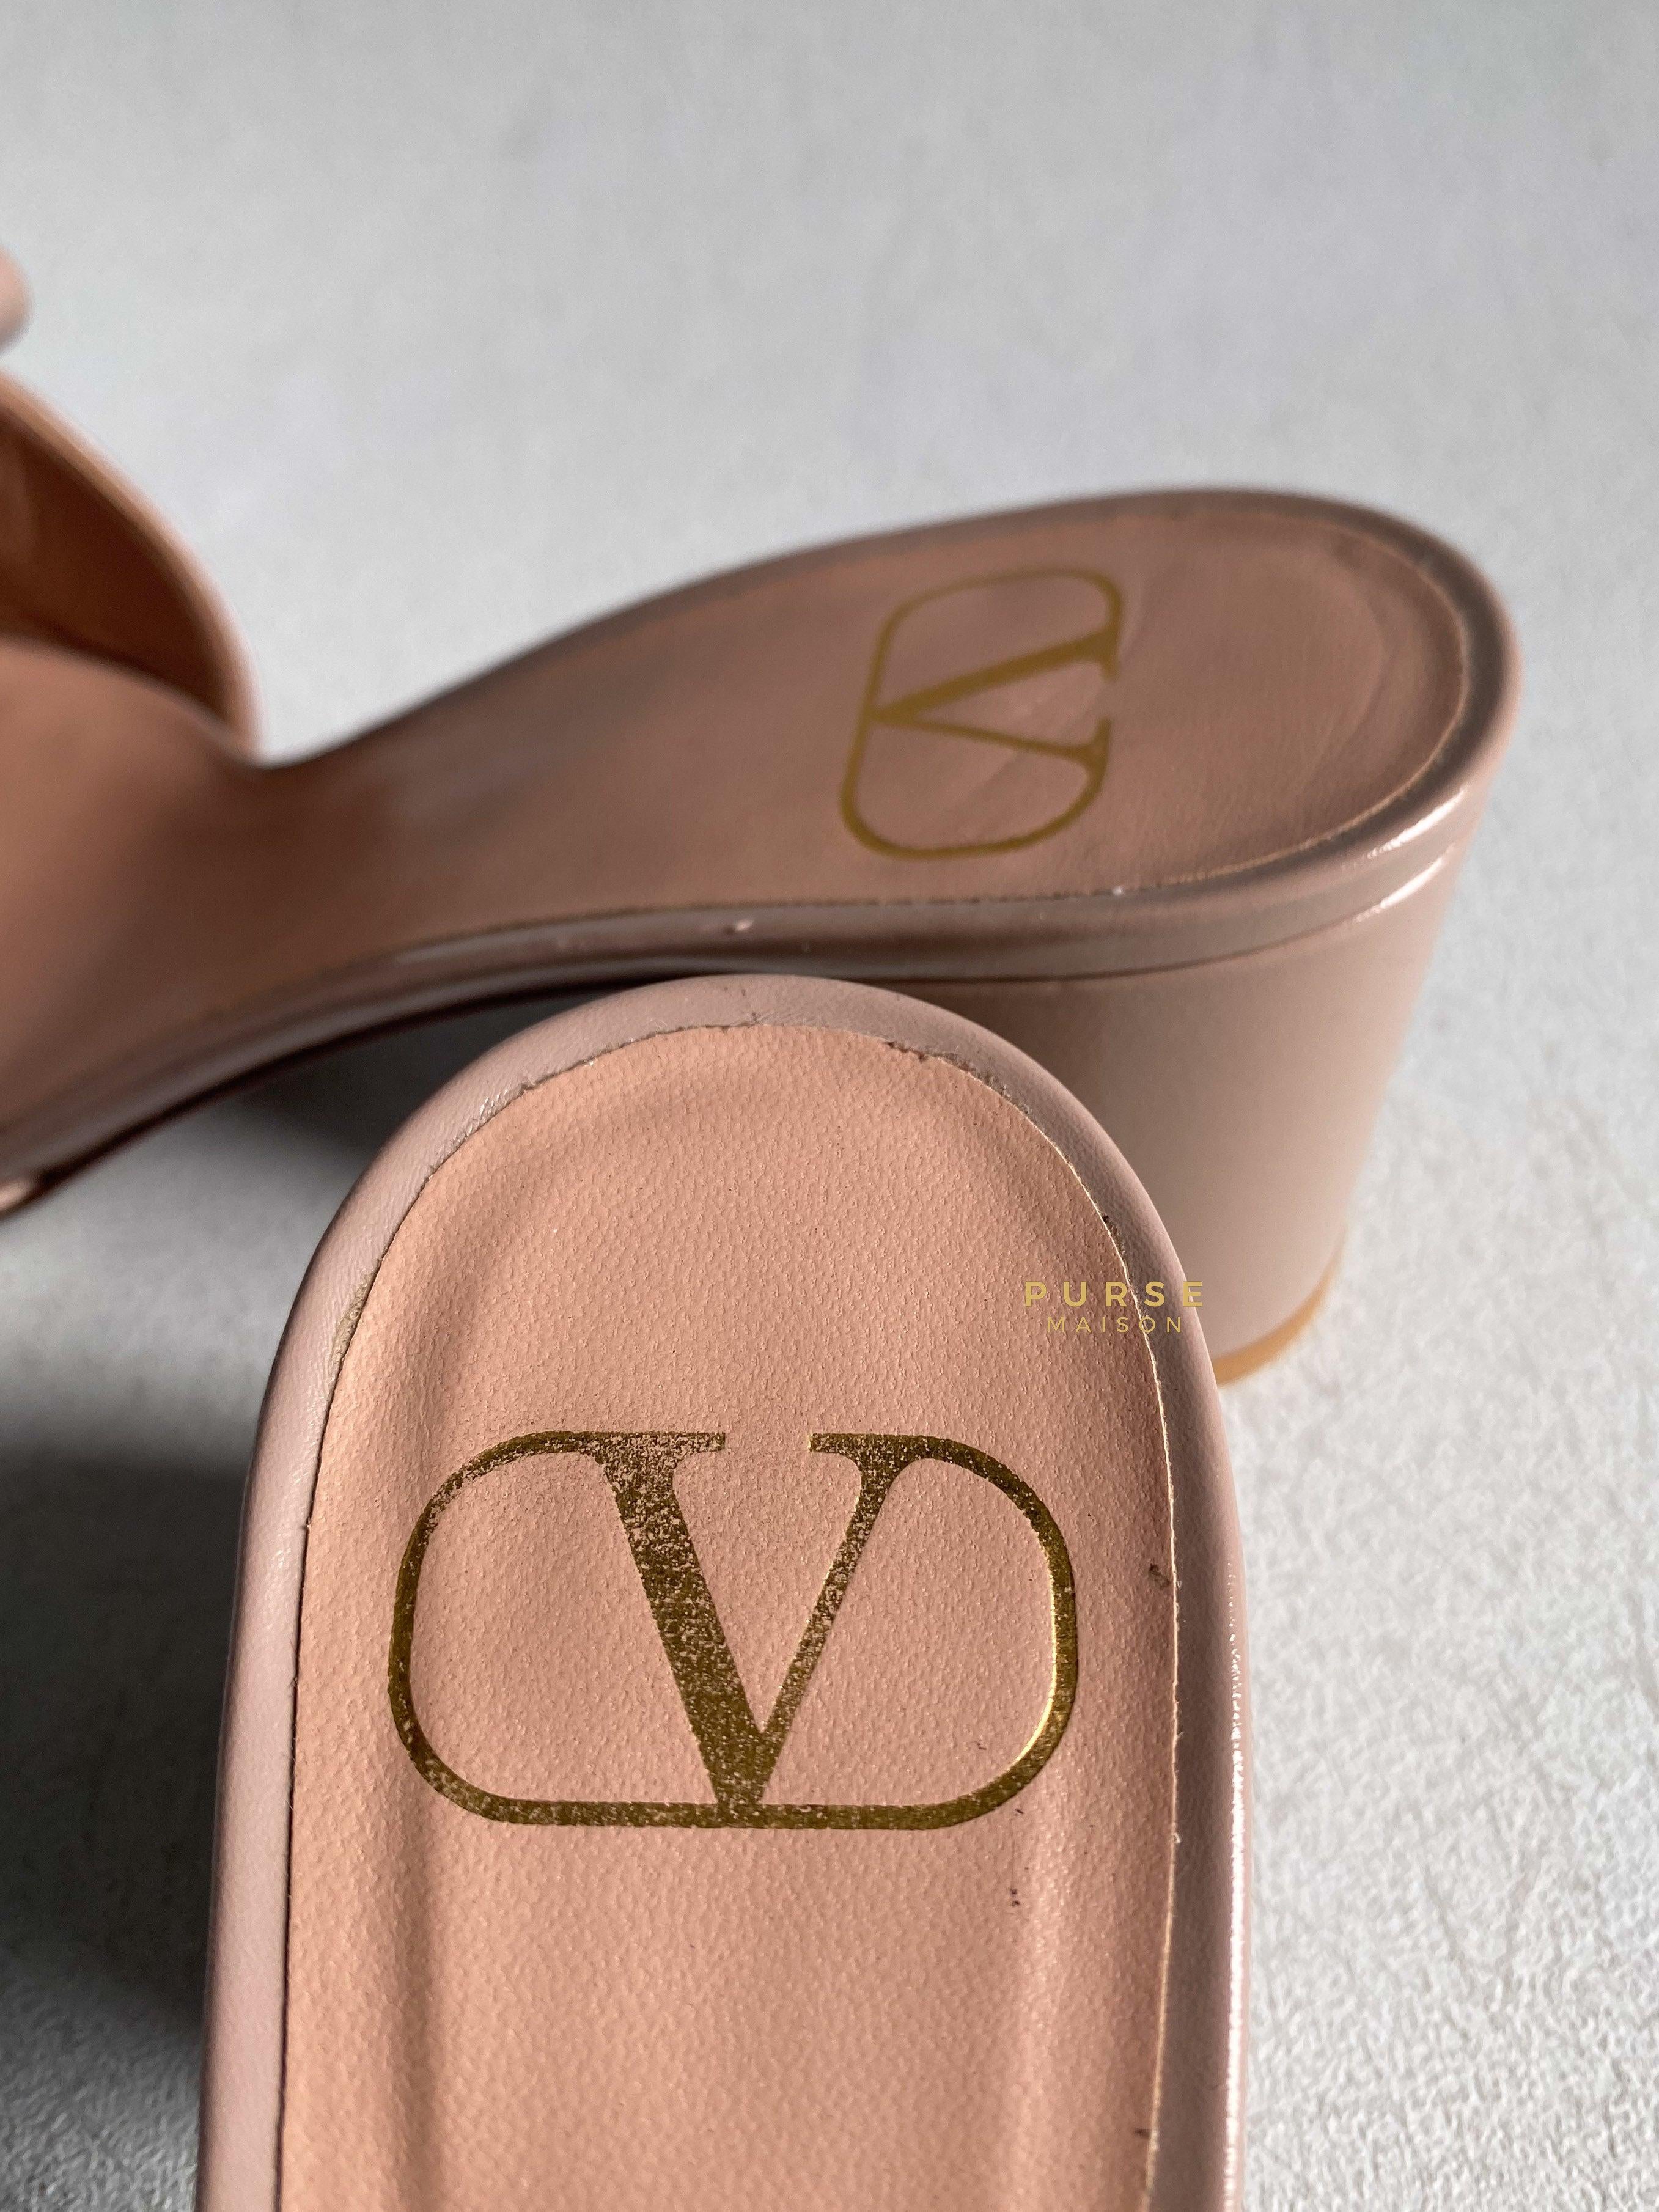 Valentino Garavani Beige Leather VLogo Open Toe Heeled Sandals Size 36.5 EU | Purse Maison Luxury Bags Shop